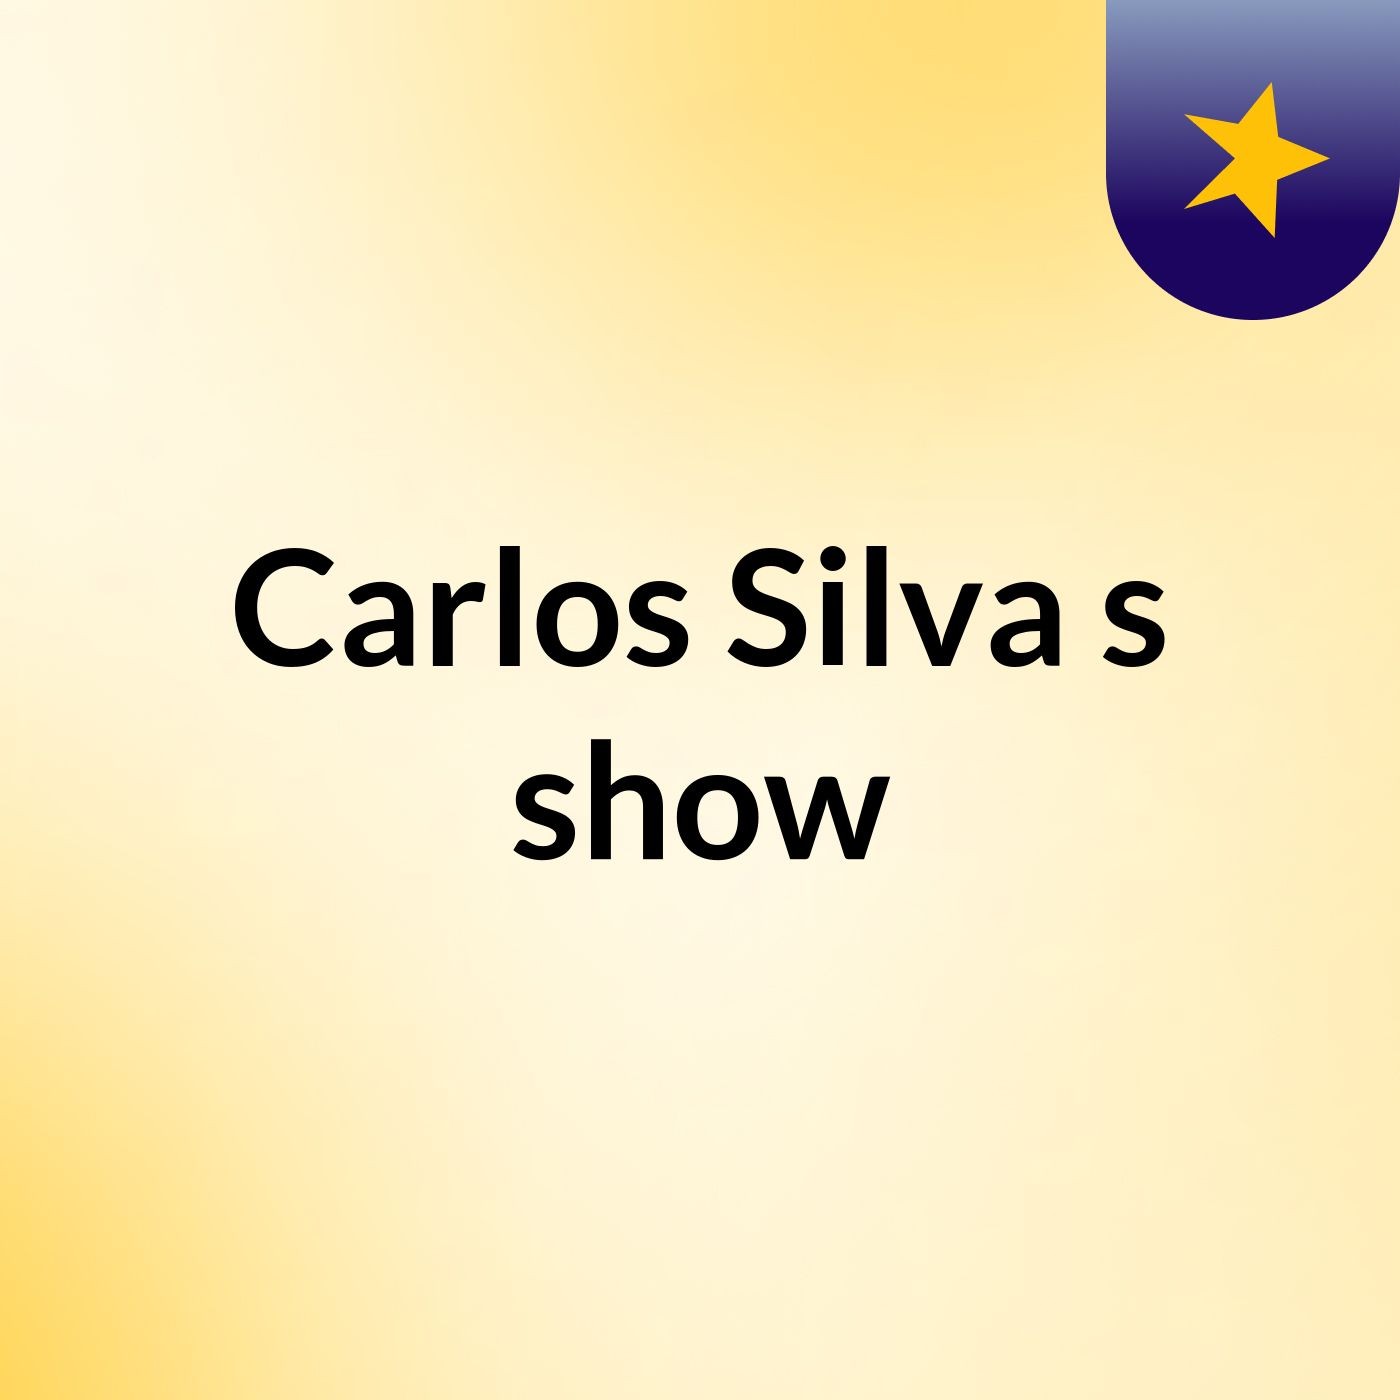 Carlos Silva's show